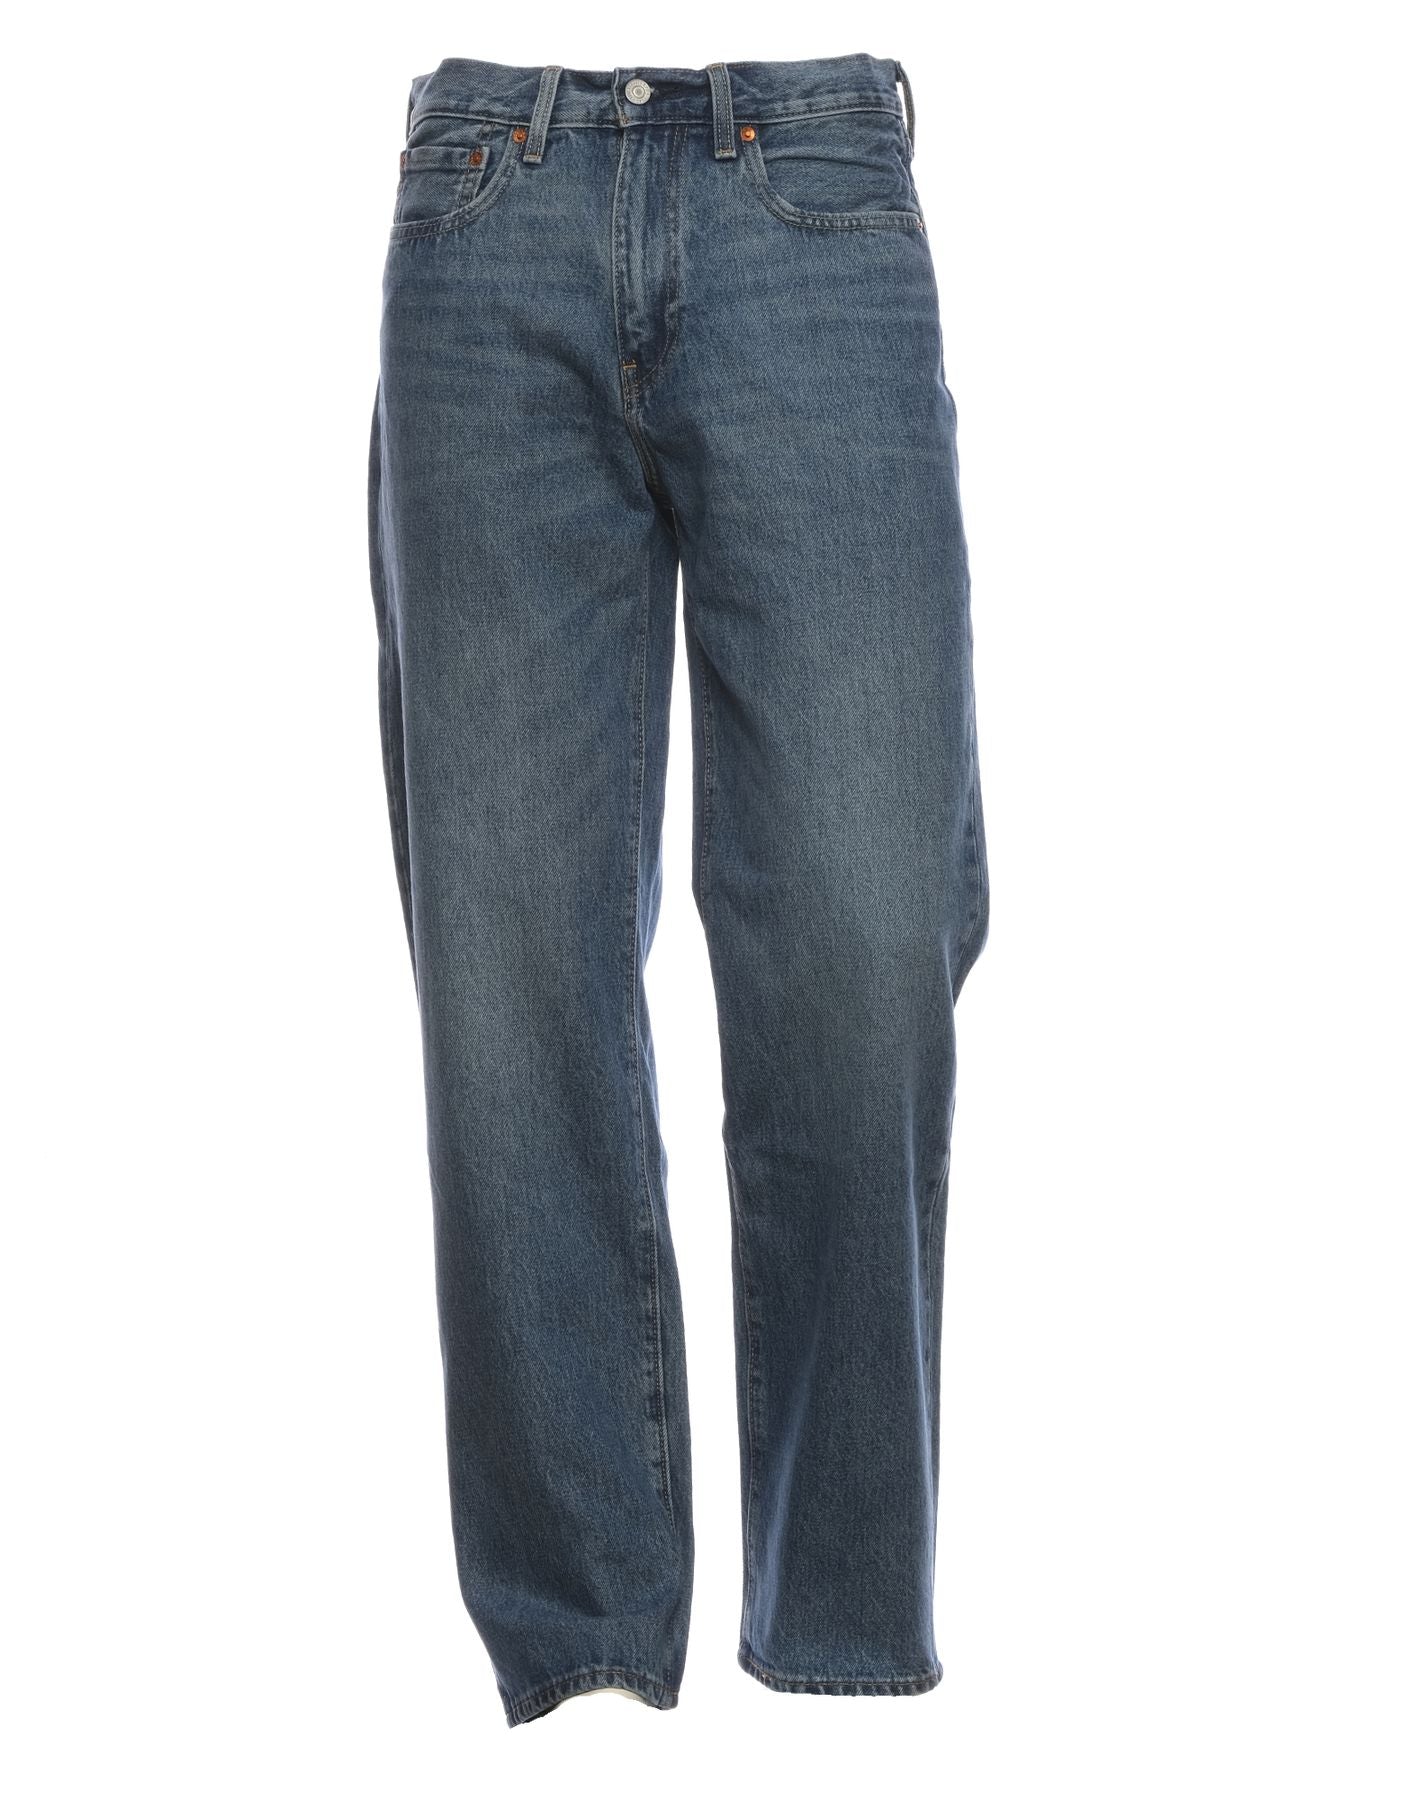 Jeans für Männer 29037 0050 MERRY AND BRIGHT Levi's